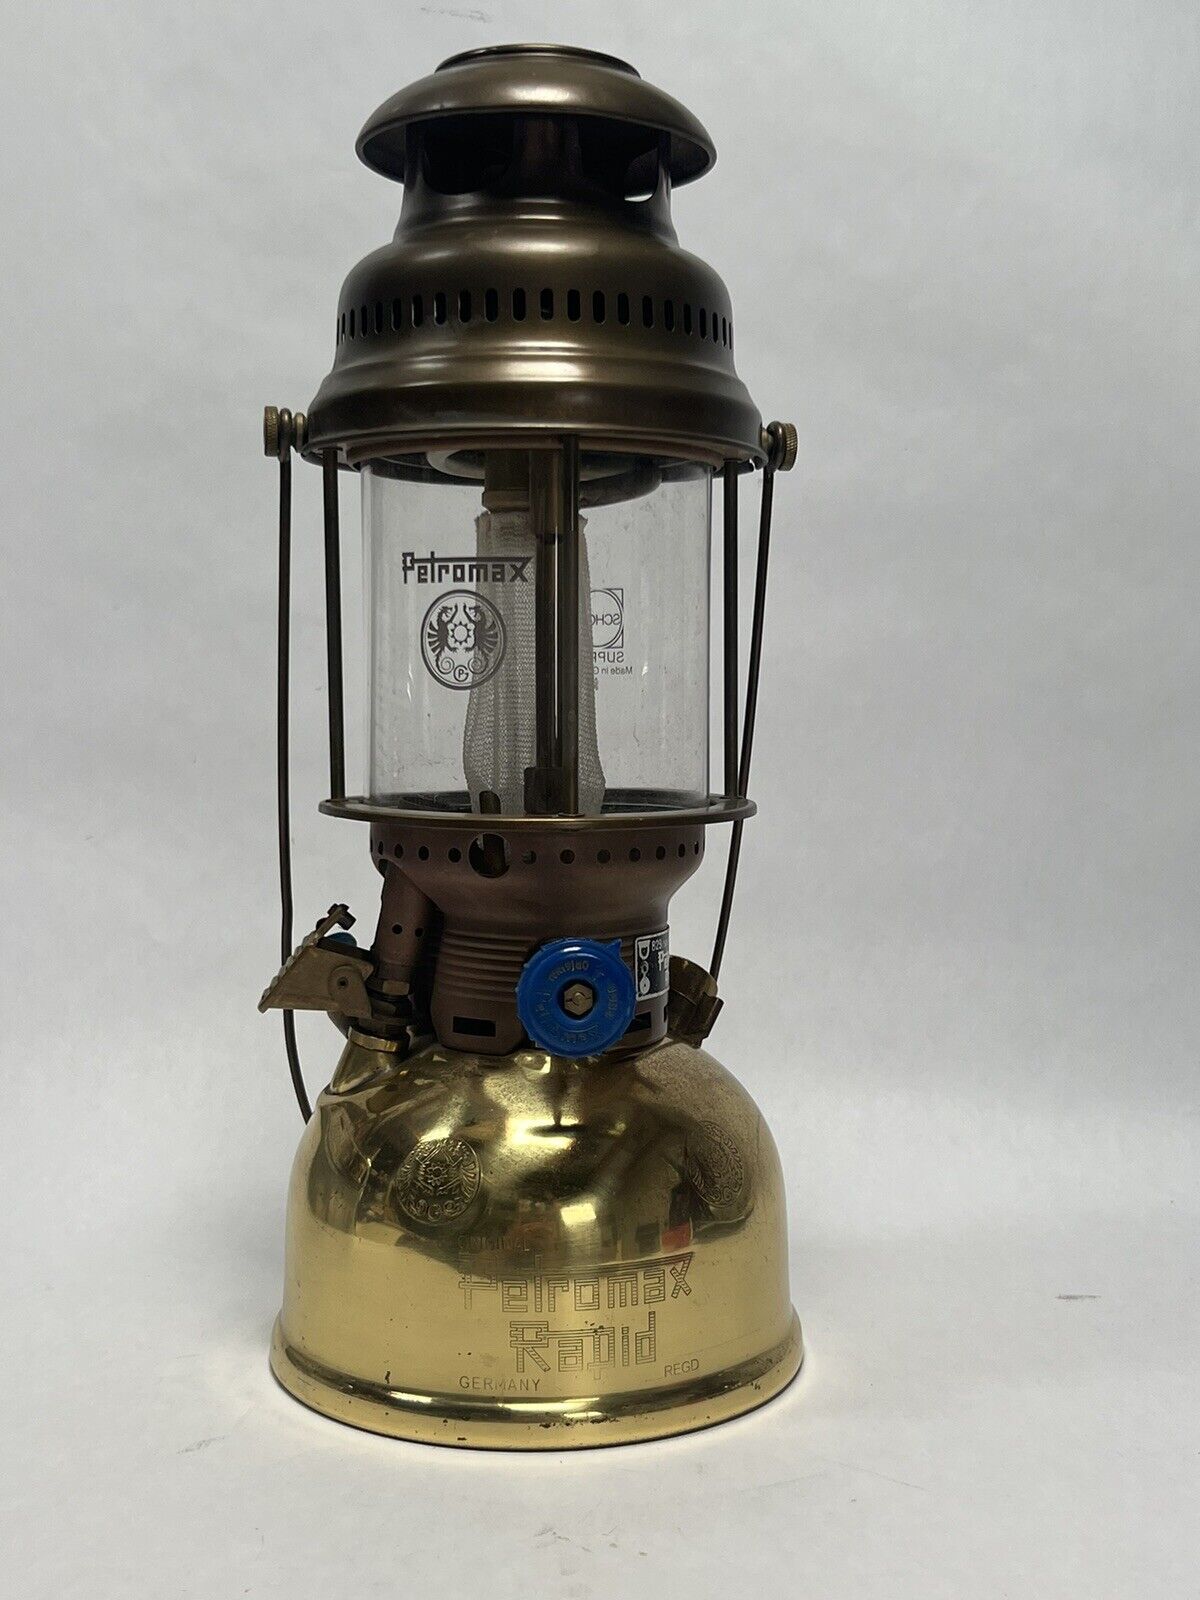 Petromax Rapid 829/500 CP Super Kerosene Pressure Lantern Lamp Vintage Germany